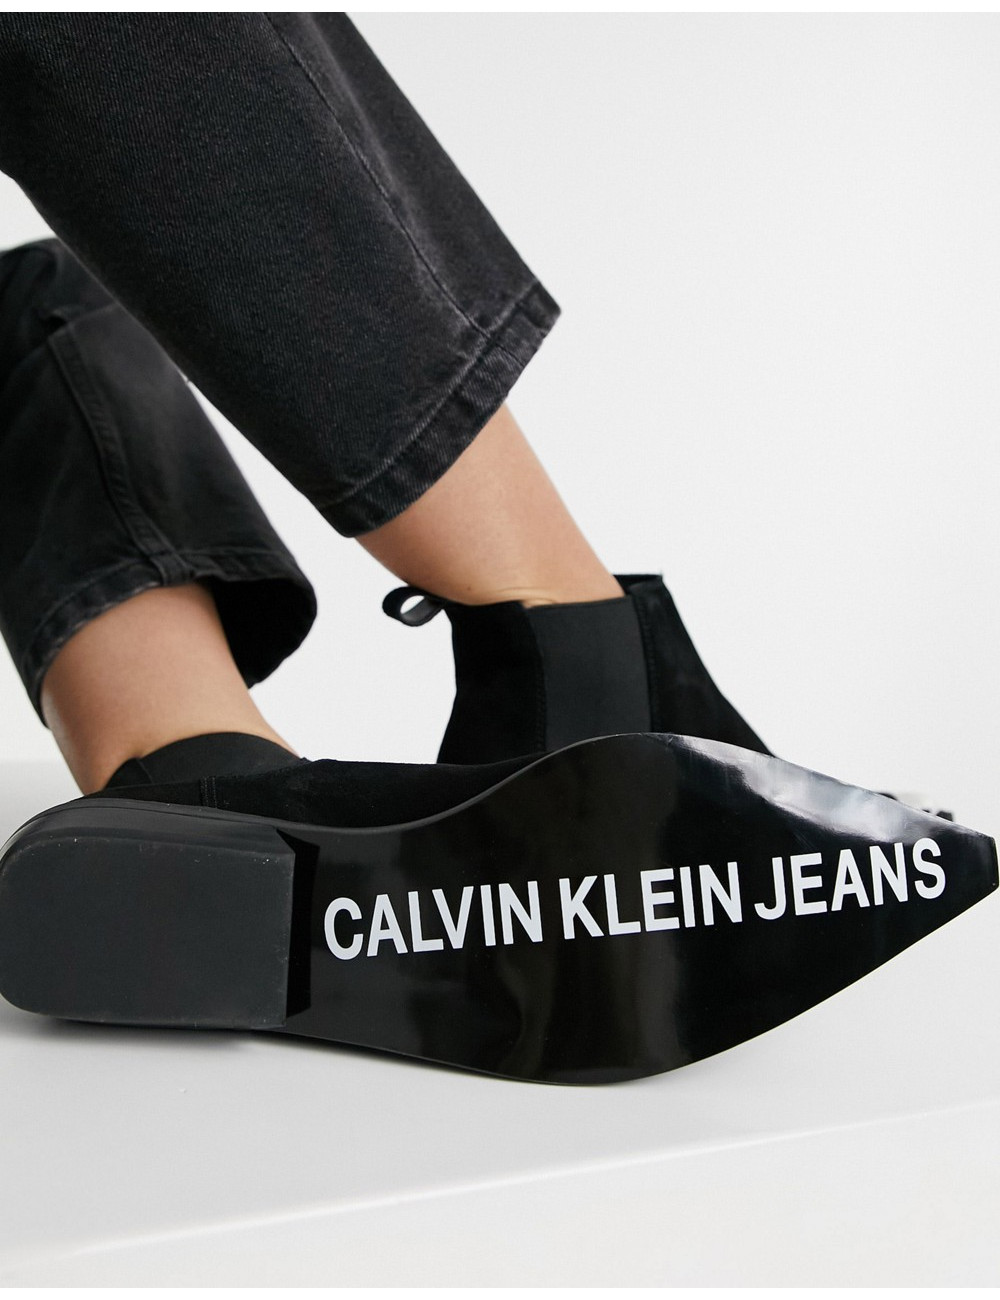 Calvin Klein Jeans arthena...